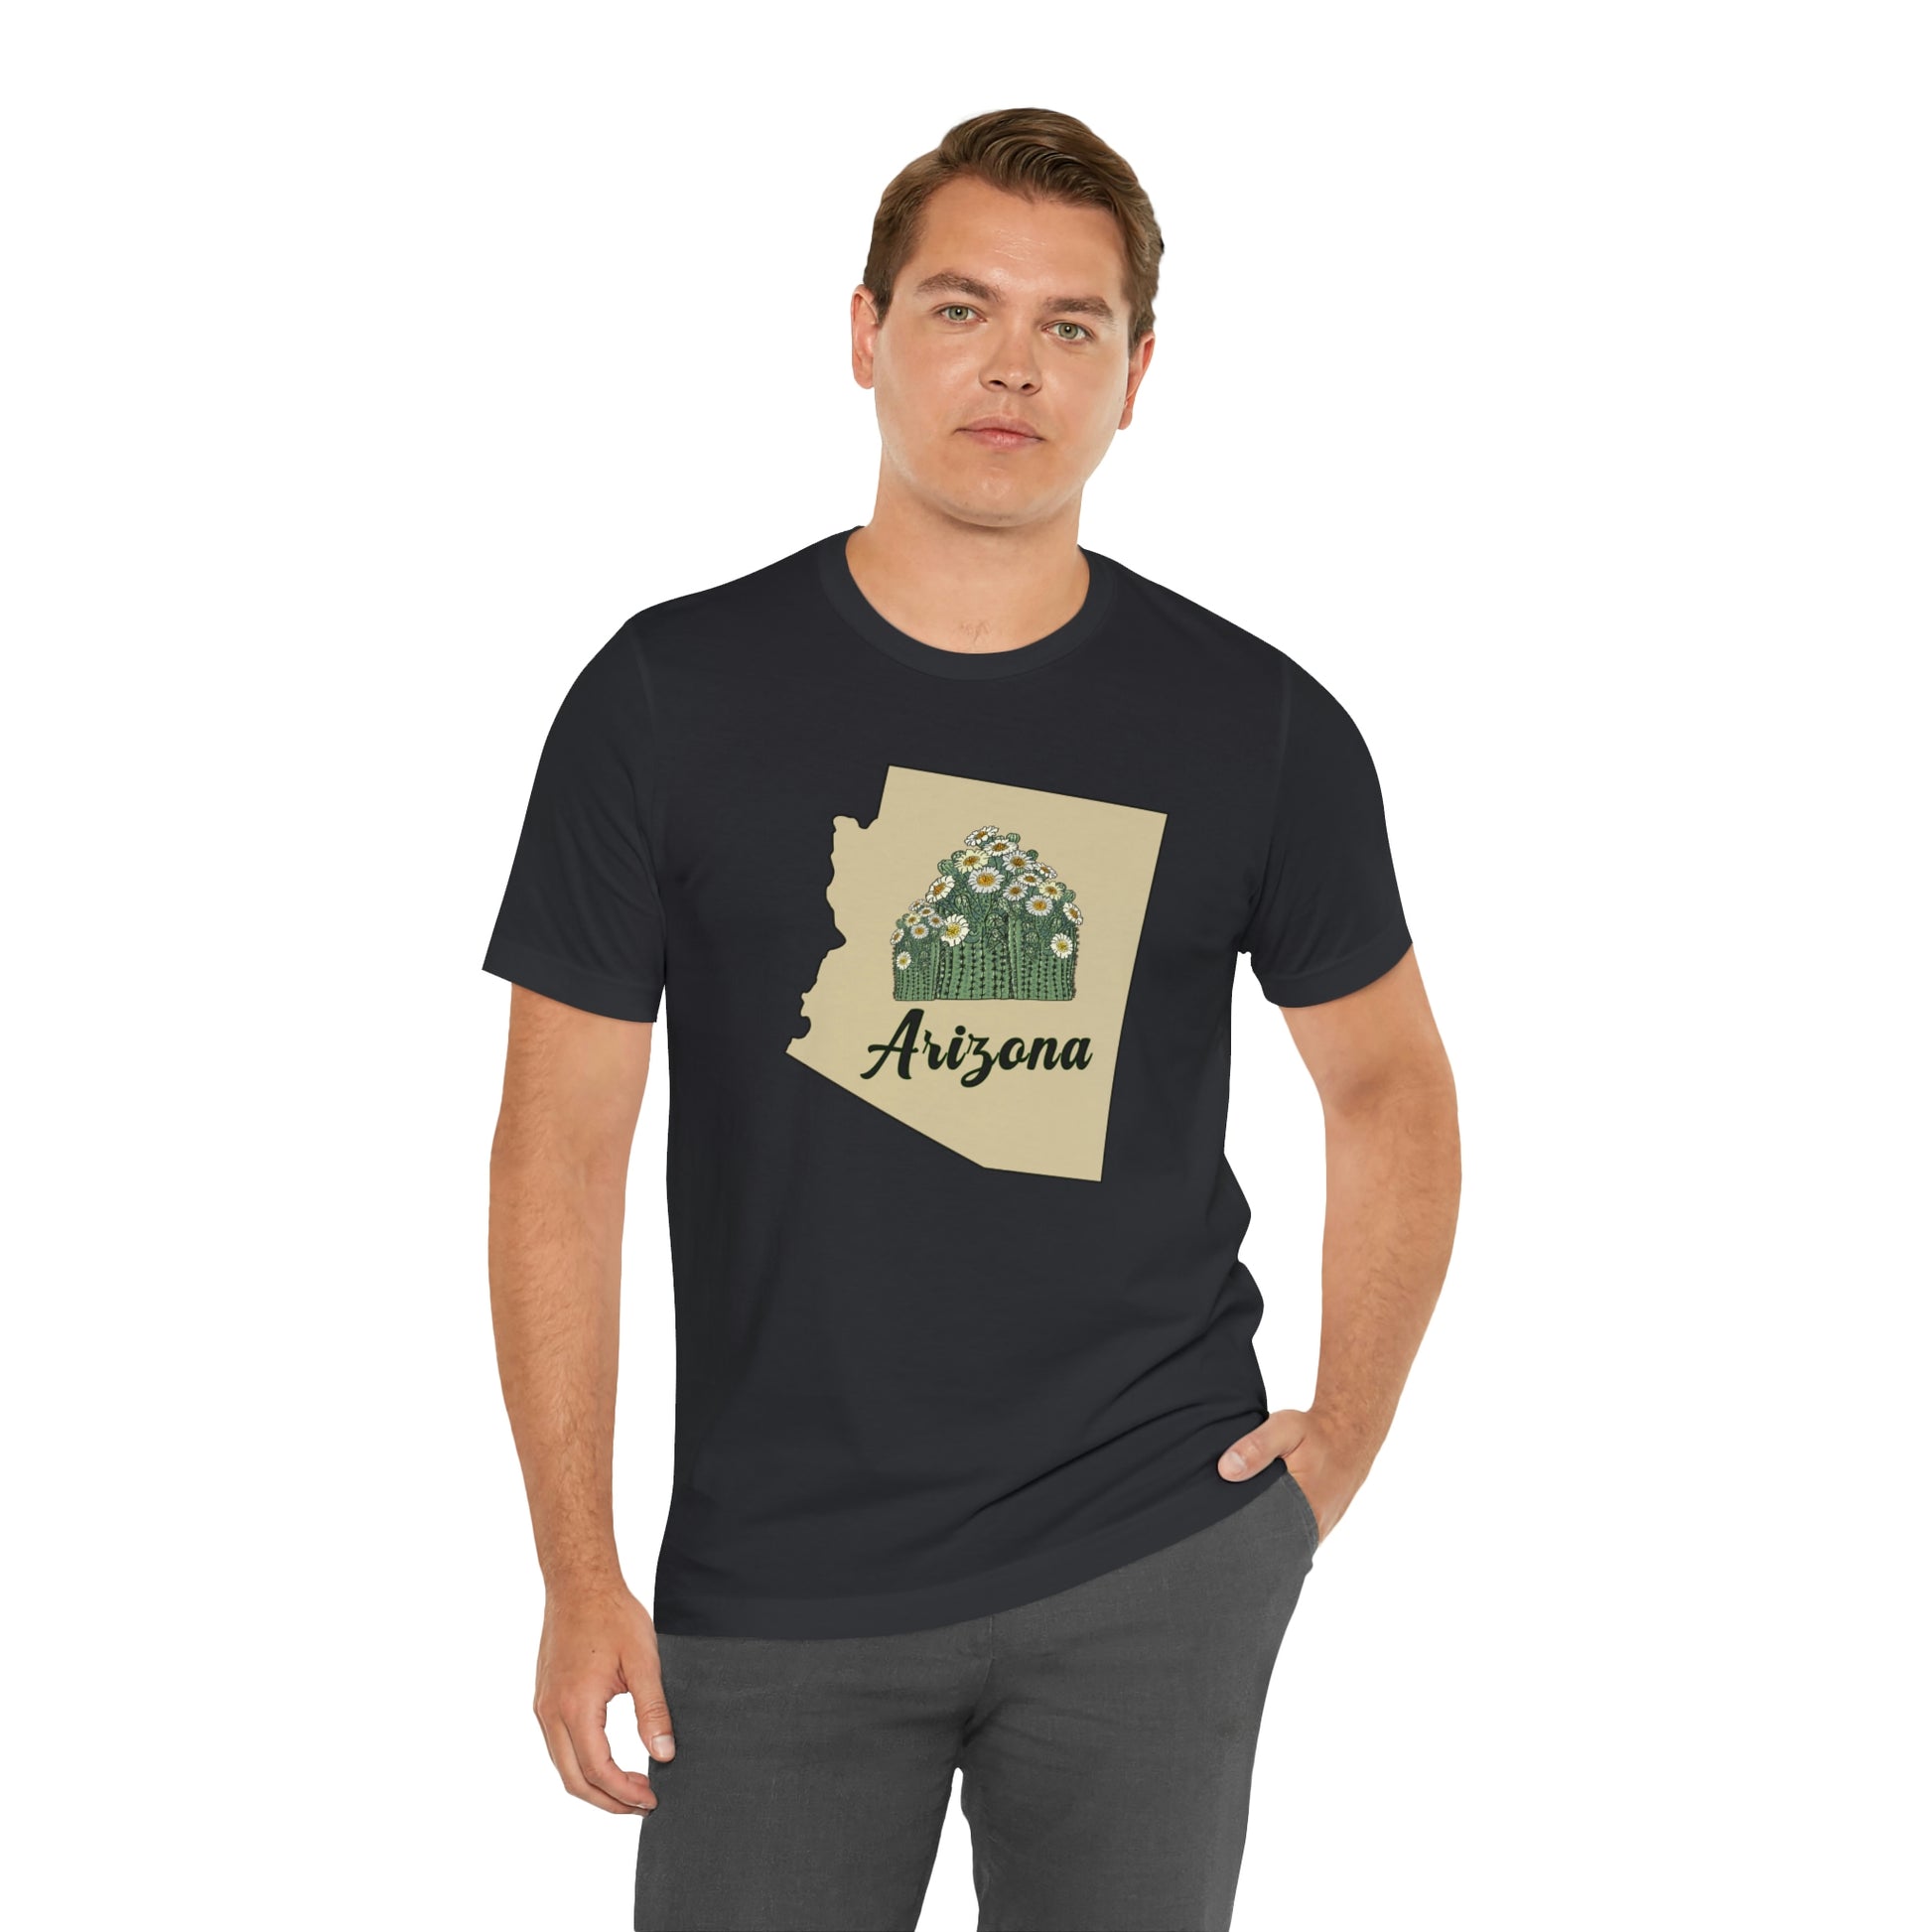 Arizona State Flower Short Sleeve T-shirt